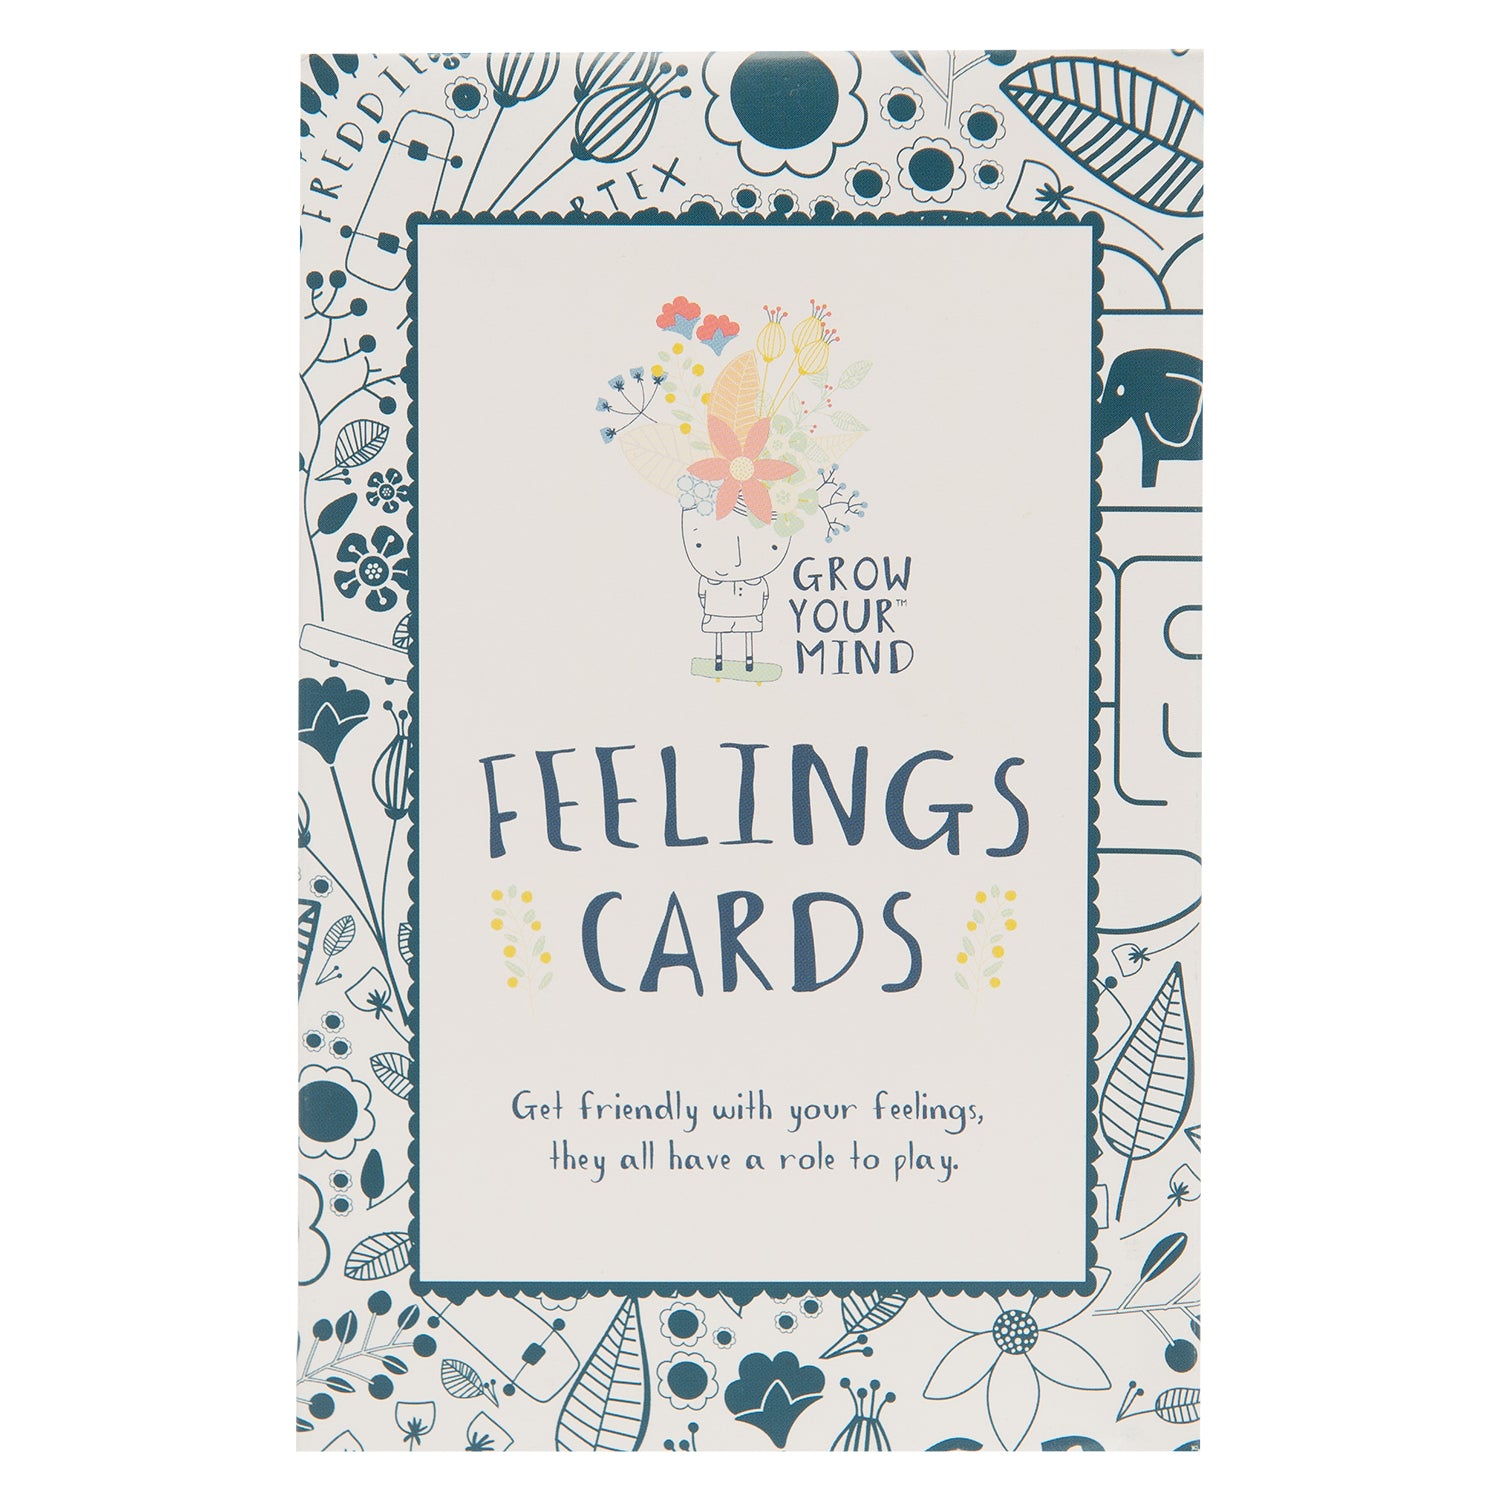 Feeling Cards